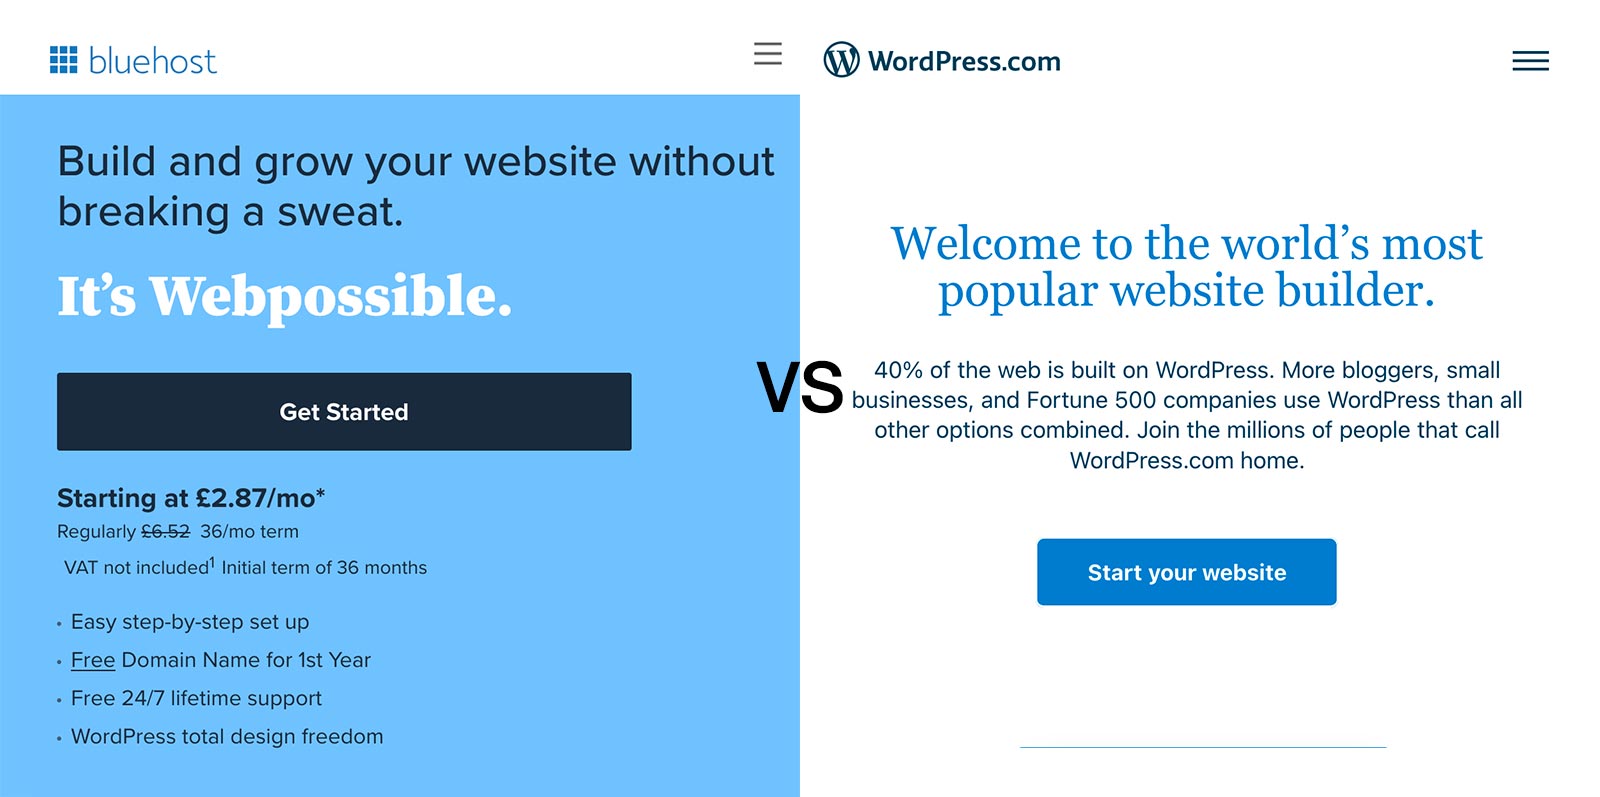 Bluehost vs WordPress.com